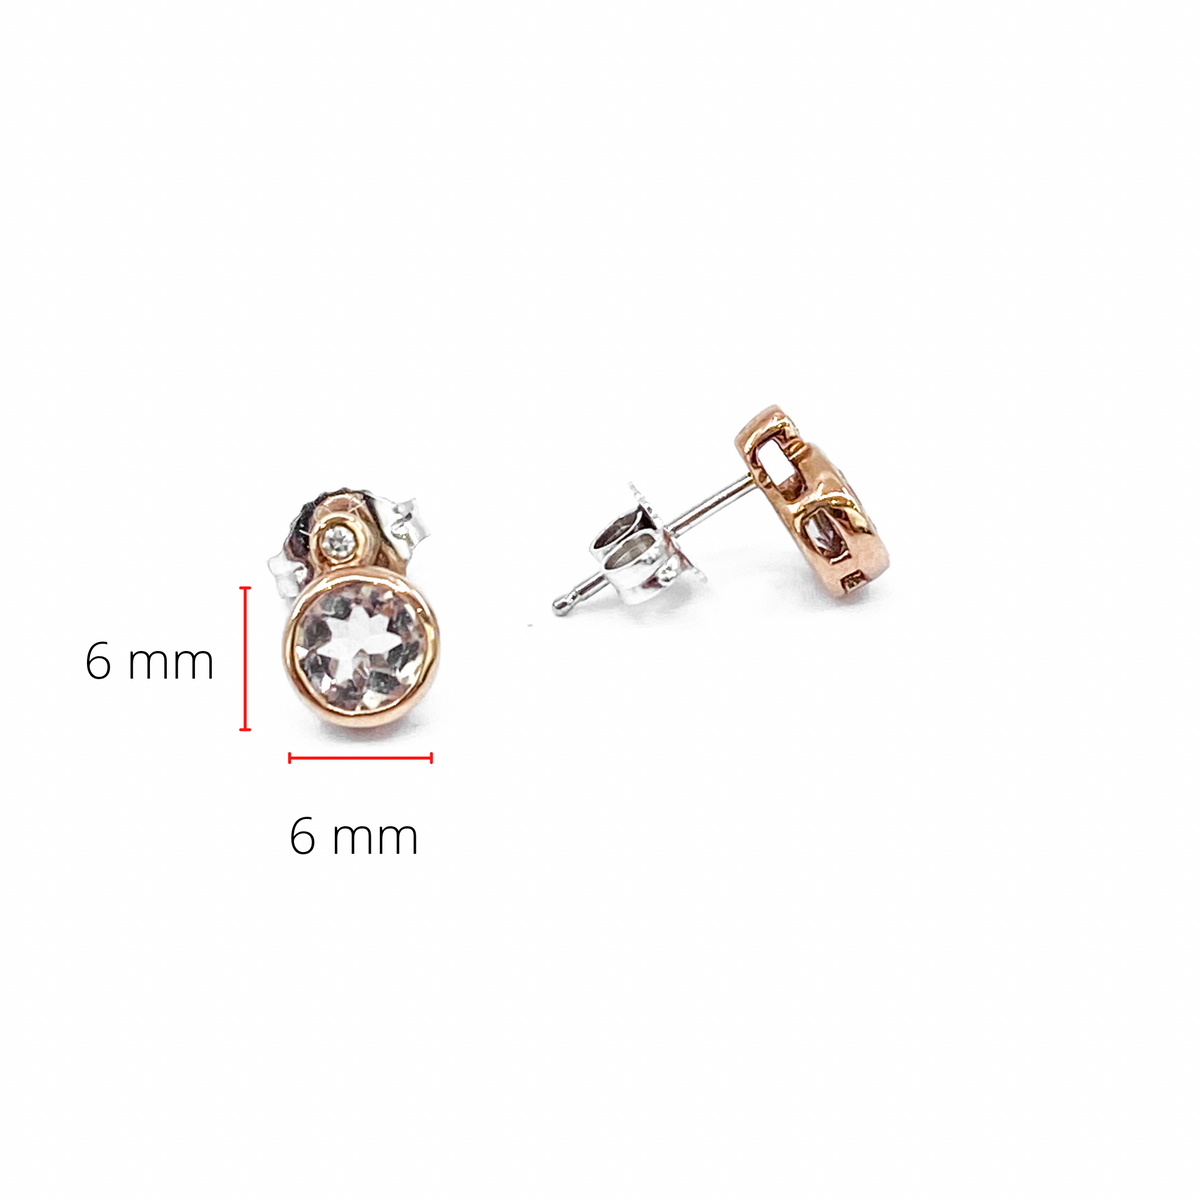 10K White and Rose Gold 0.96cttw Genuine Morganite &amp; 0.02cttw Diamond Stud Earrings